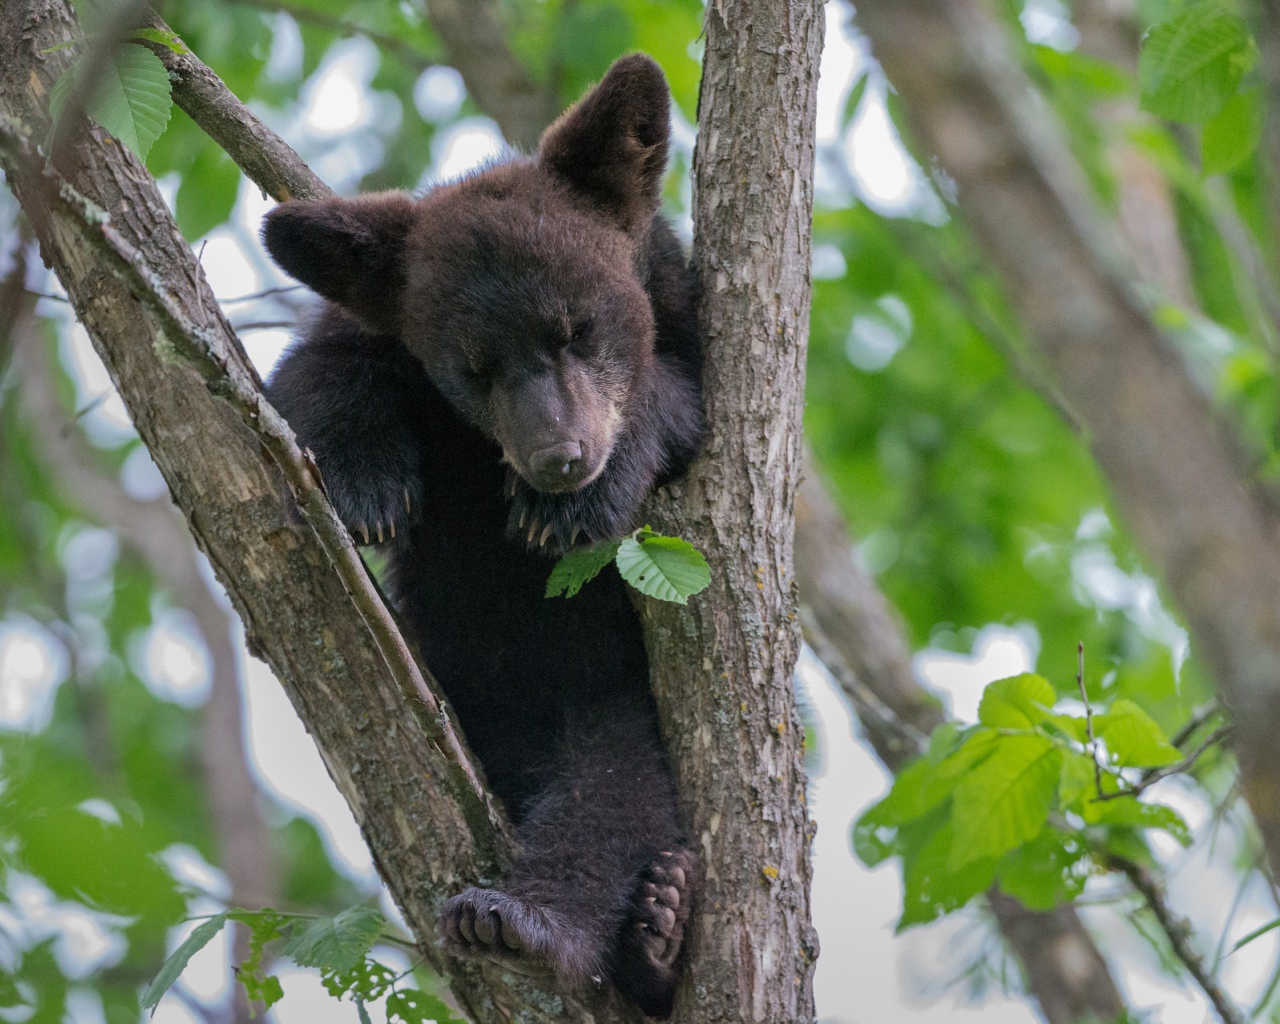 A little bear cub is sitting on a tree branch